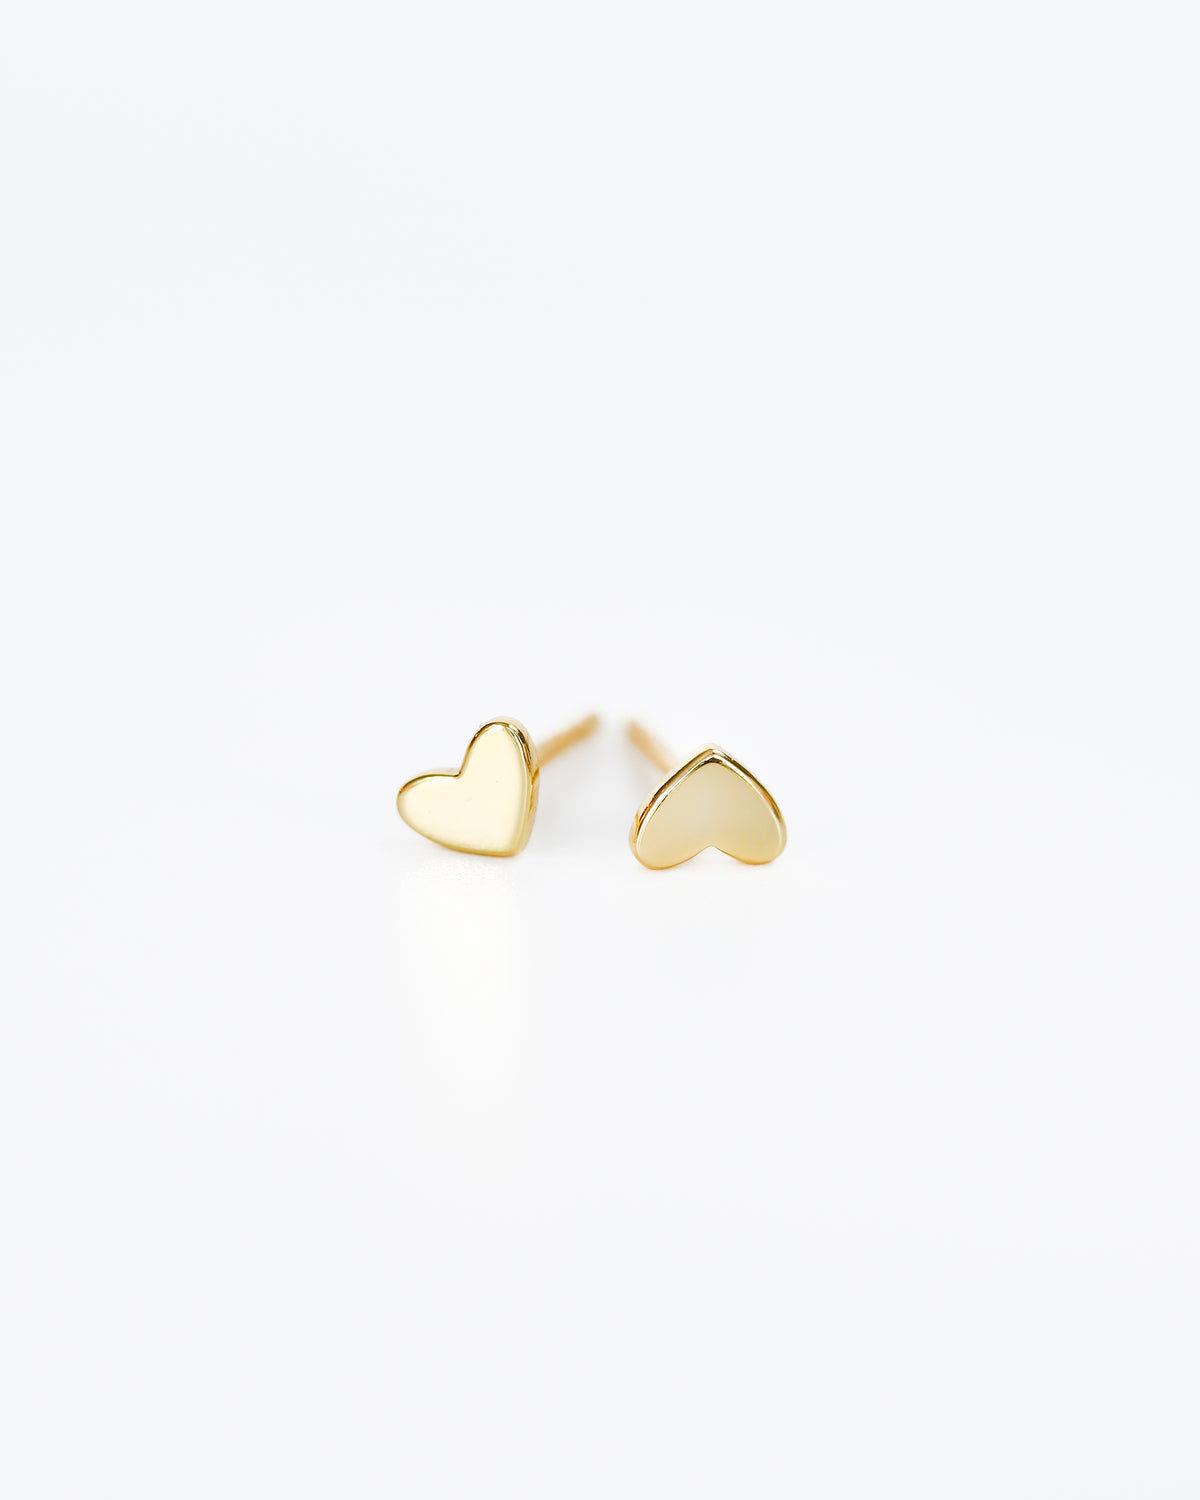 Teeny tiny earrings 18k Gold heart studs freeshipping - Ollijewelry